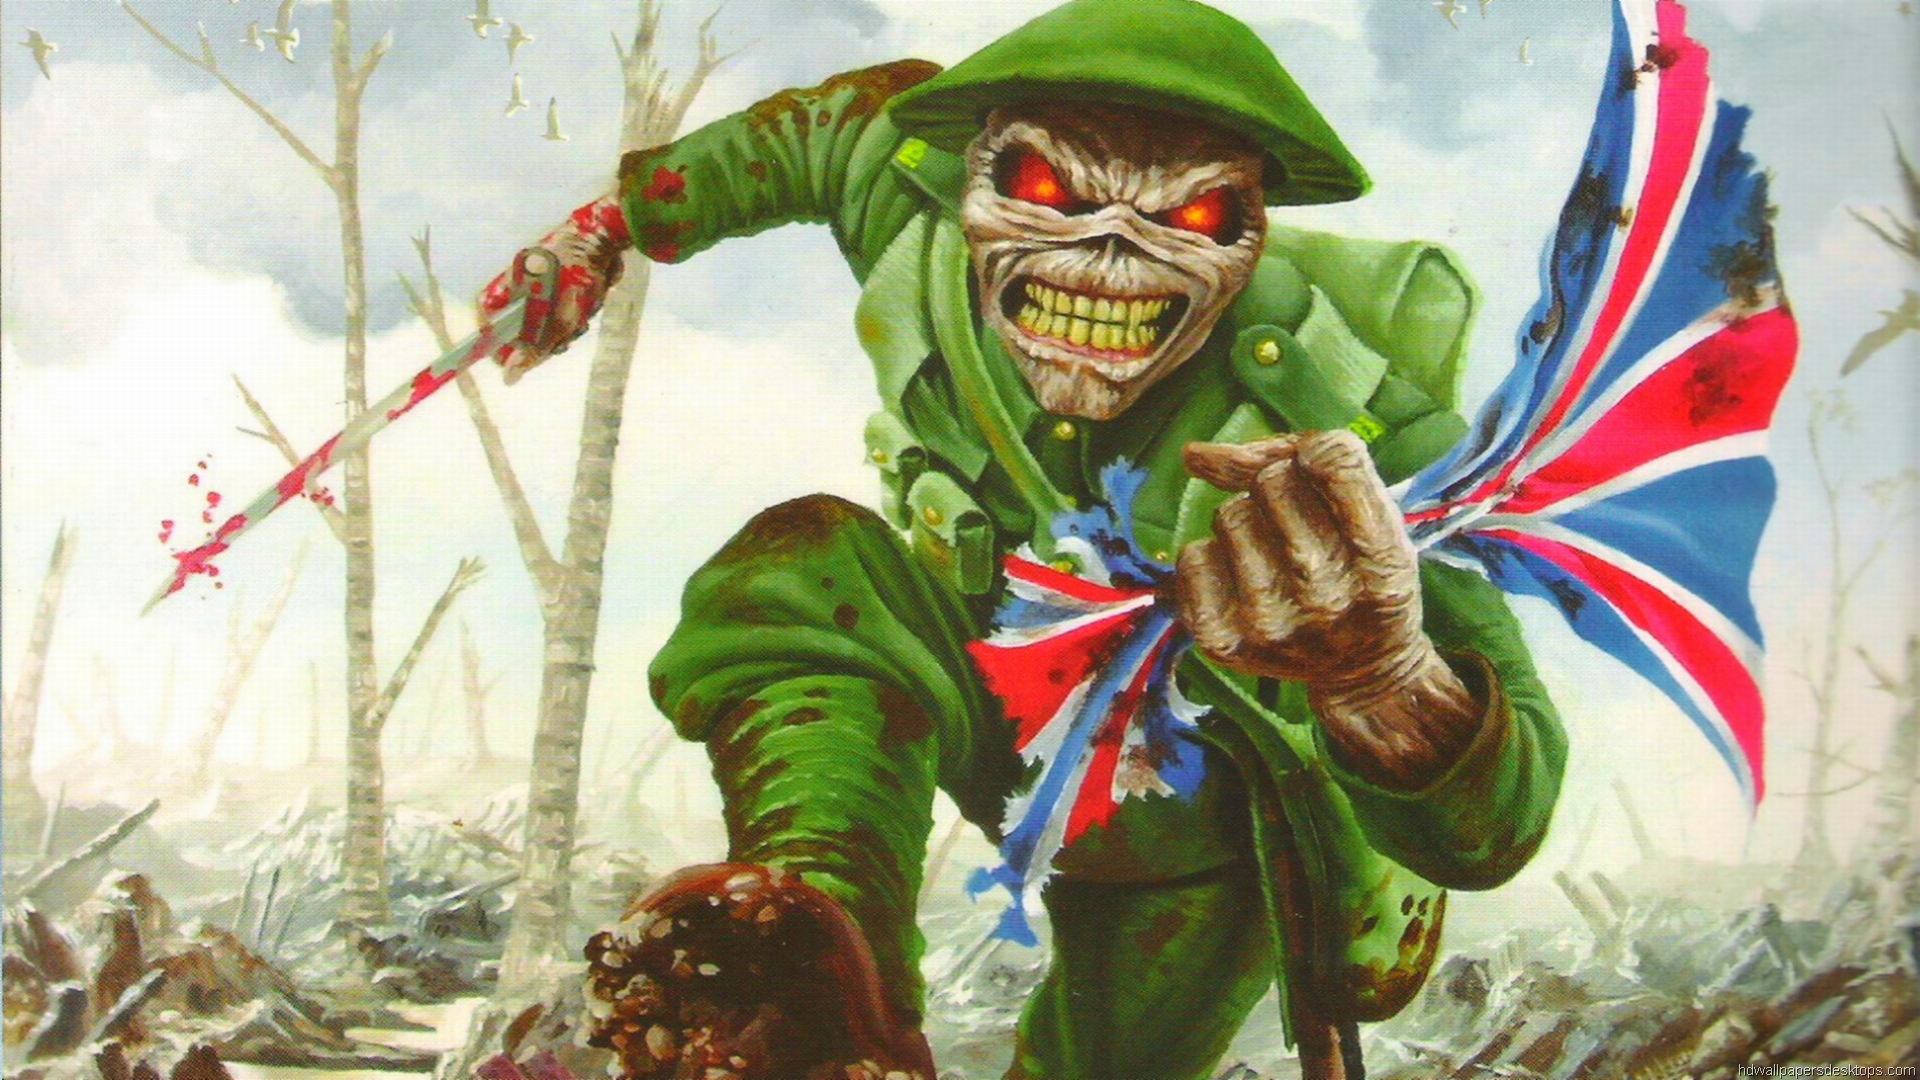 HD Eddie Iron Maiden Album Covers X Kb Jpeg